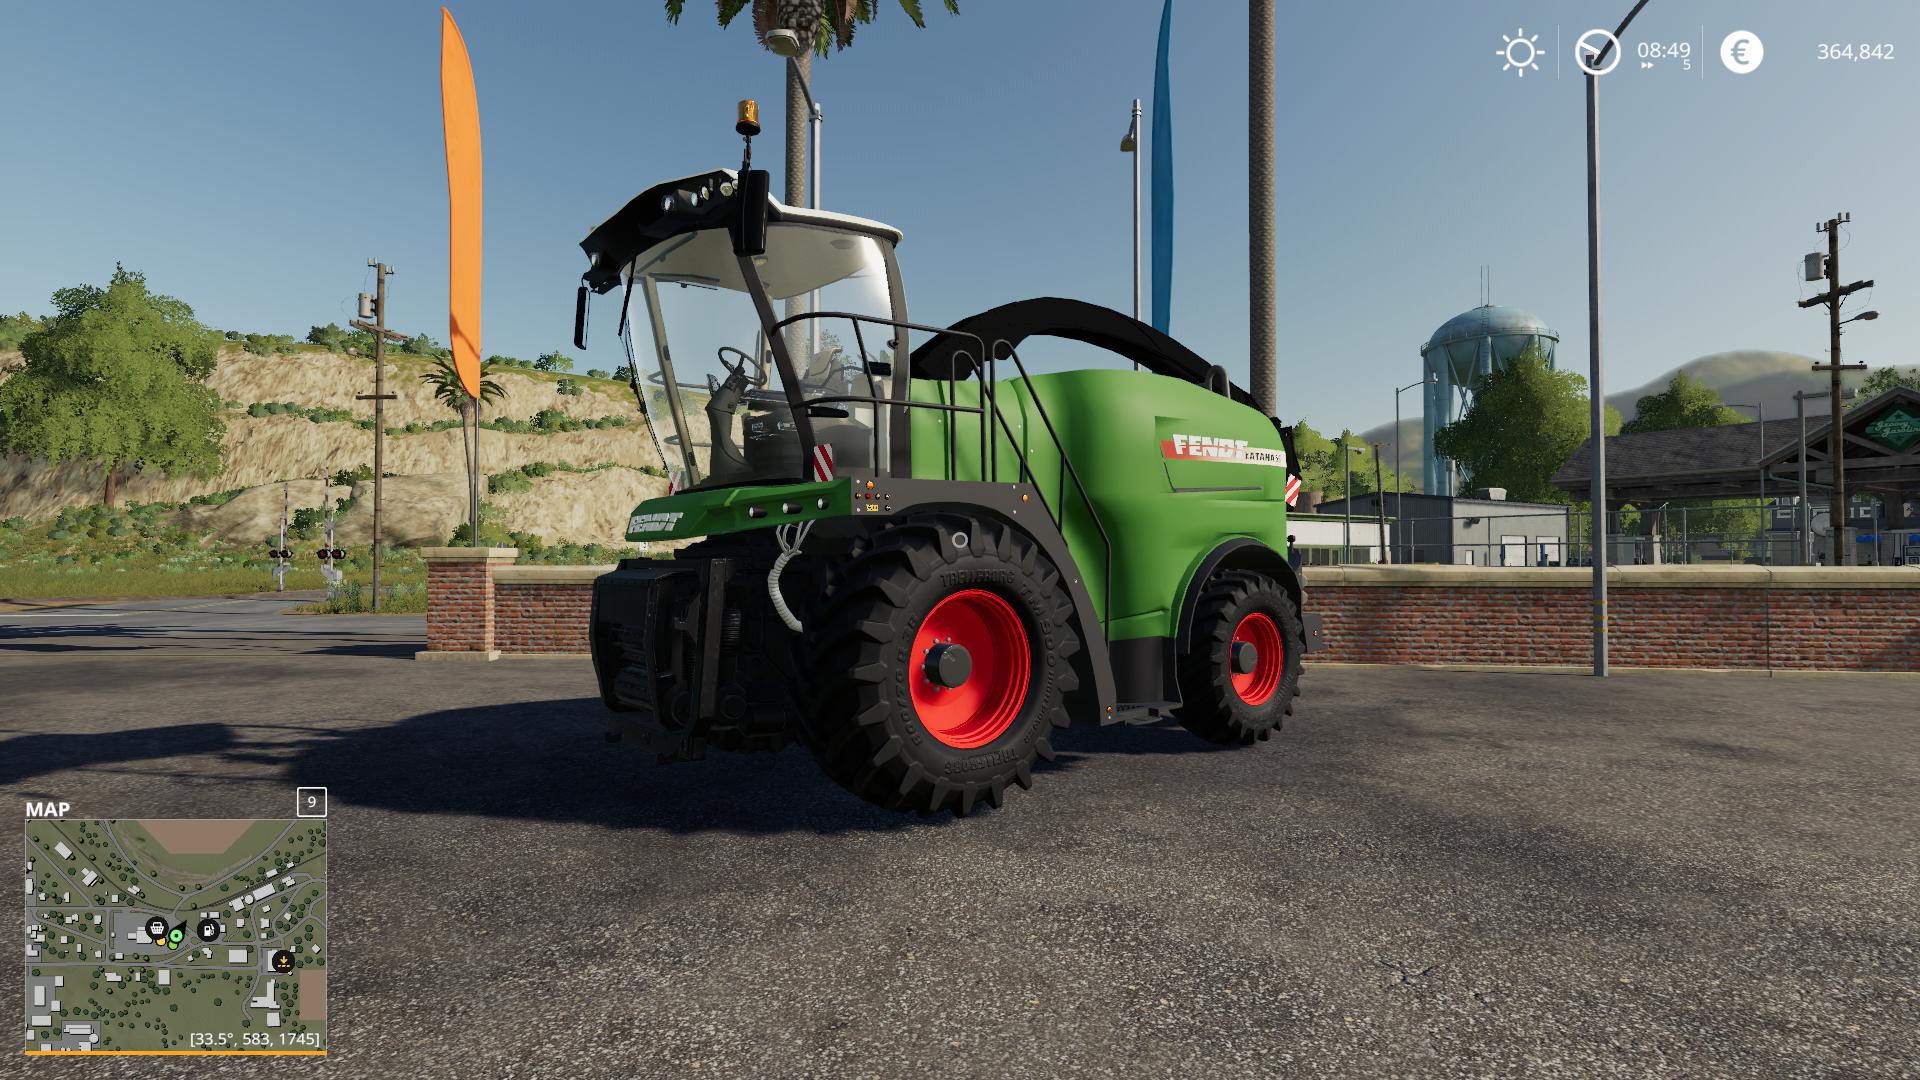 Fendt Katana V1 0 Fs19 Farming Simulator 19 Mod Fs19 Mod